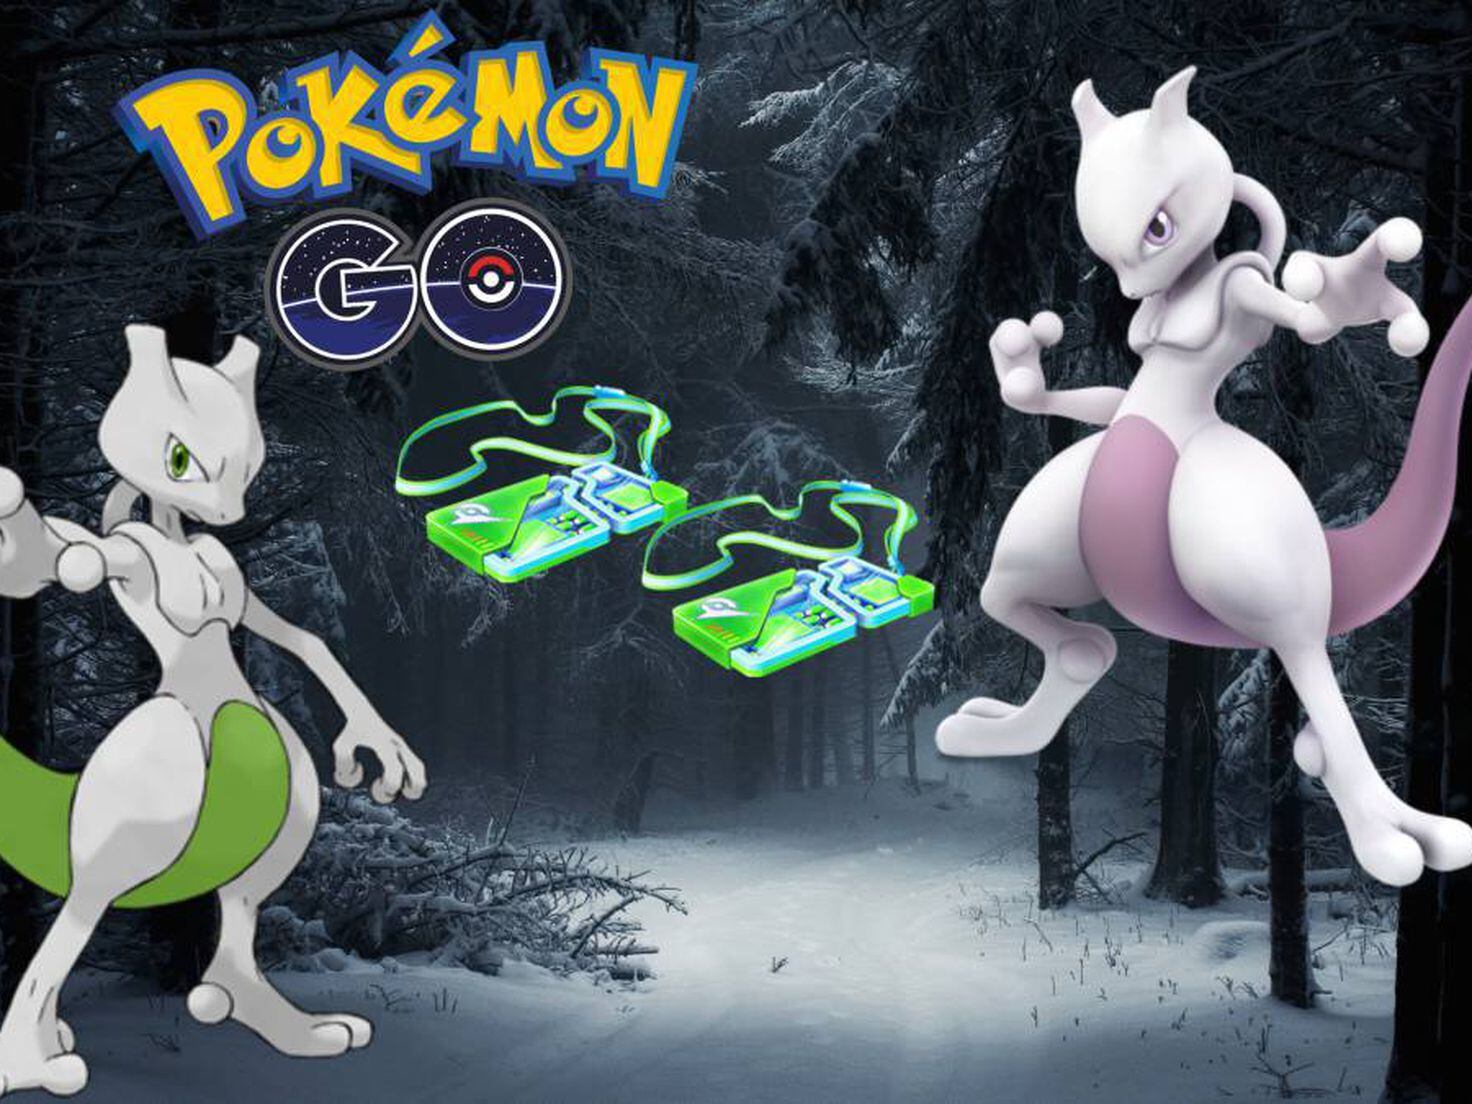 Pokémon GO: Vencer a Mewtwo en incursiones oscuras - Fechas y